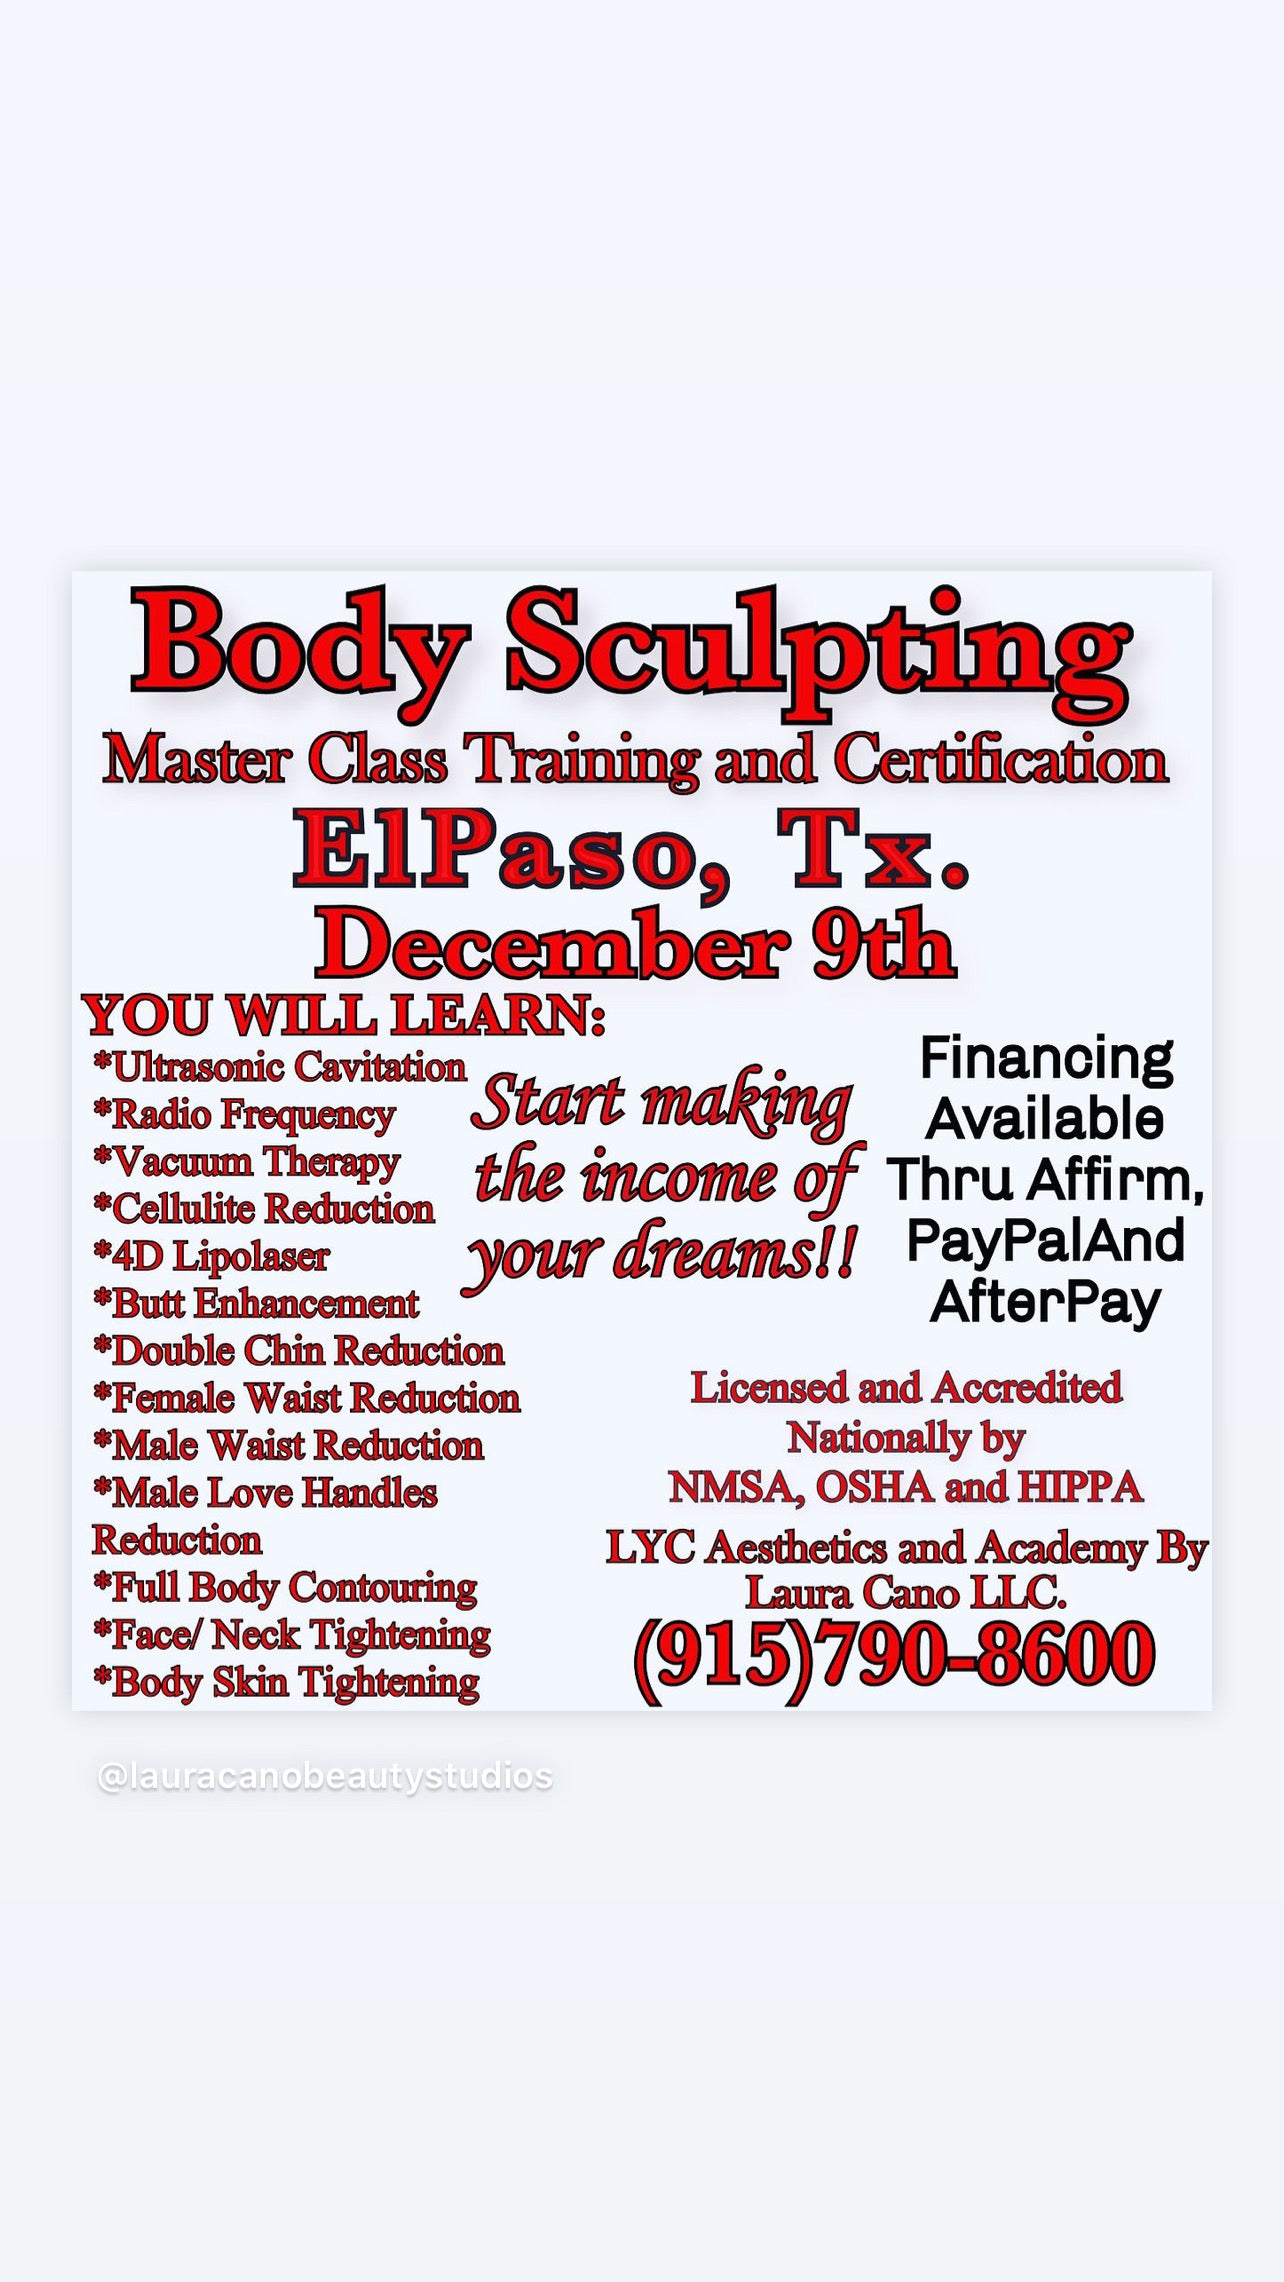 Body Sculpting Master Class Training and Certification- ElPaso, Tx. De